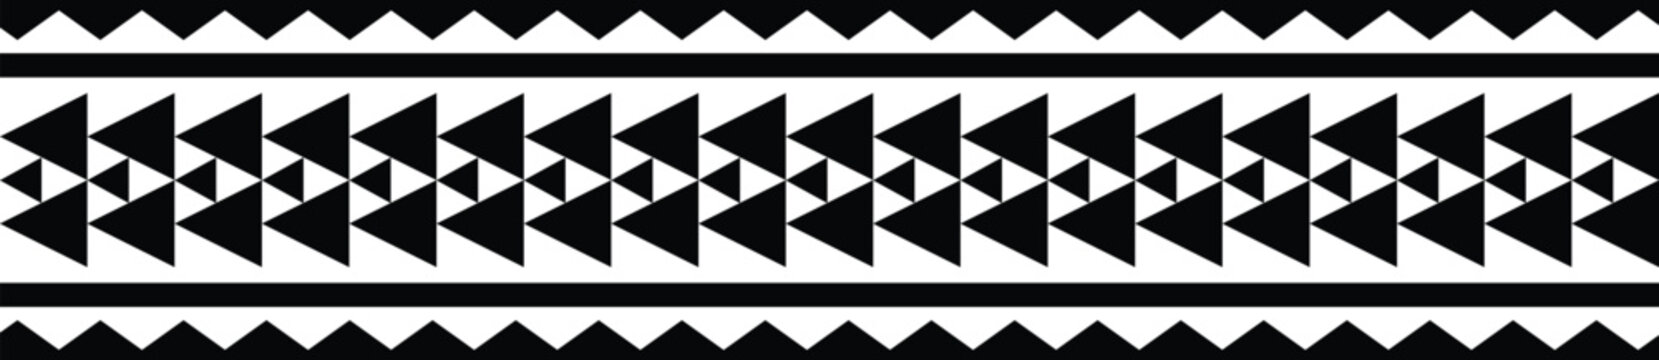 Polynesian design tribal tattoo border. Tribal design ethnic maori band.Tattoo  ribbon sleeve bracelet. Fabric seamless isolated hawaiian pattern on white background.